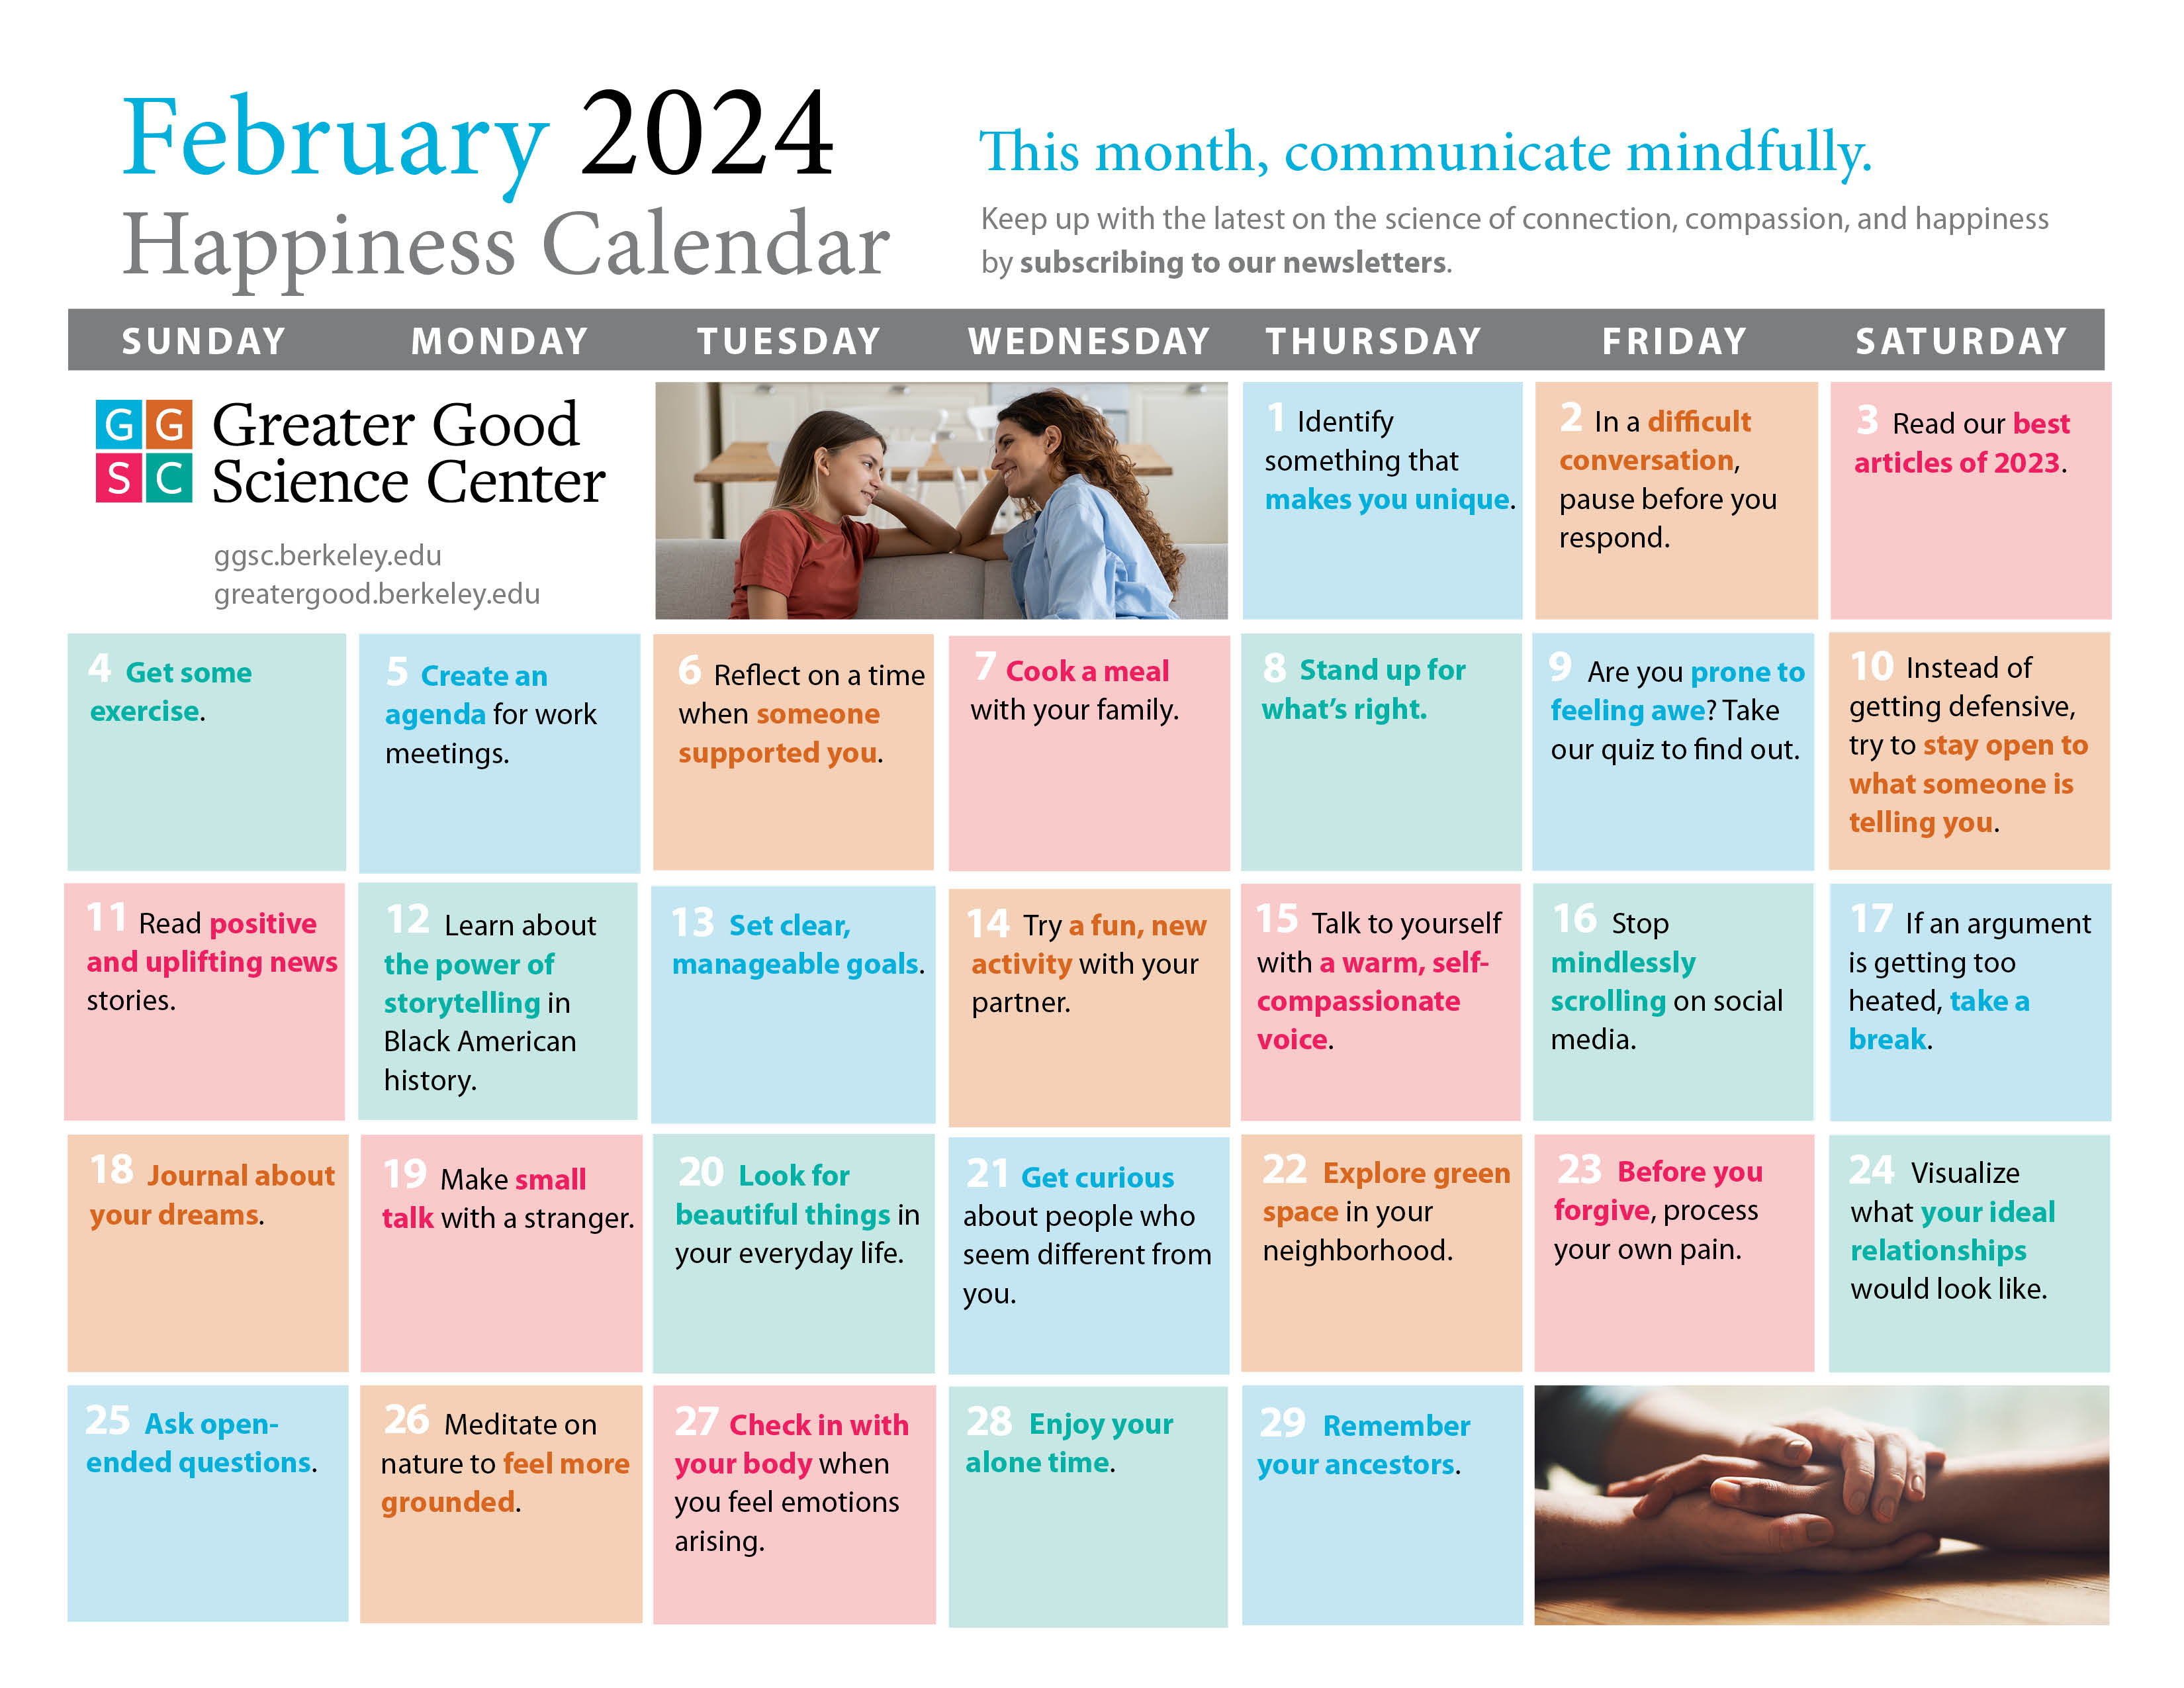 February 2024 happiness calendar